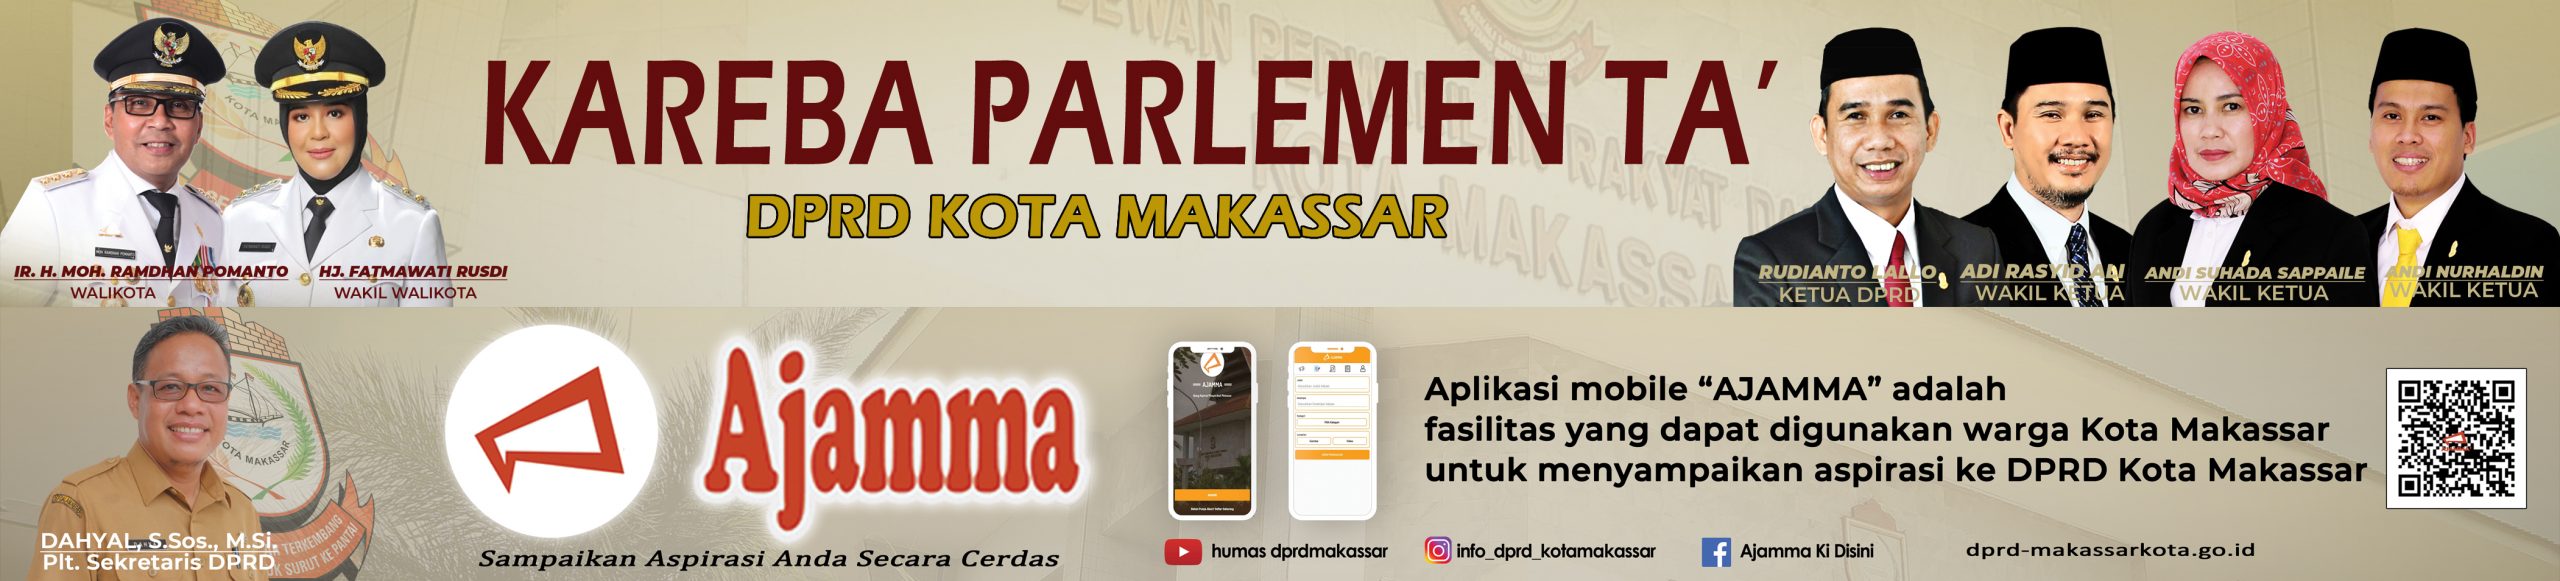 banner walikota makassar